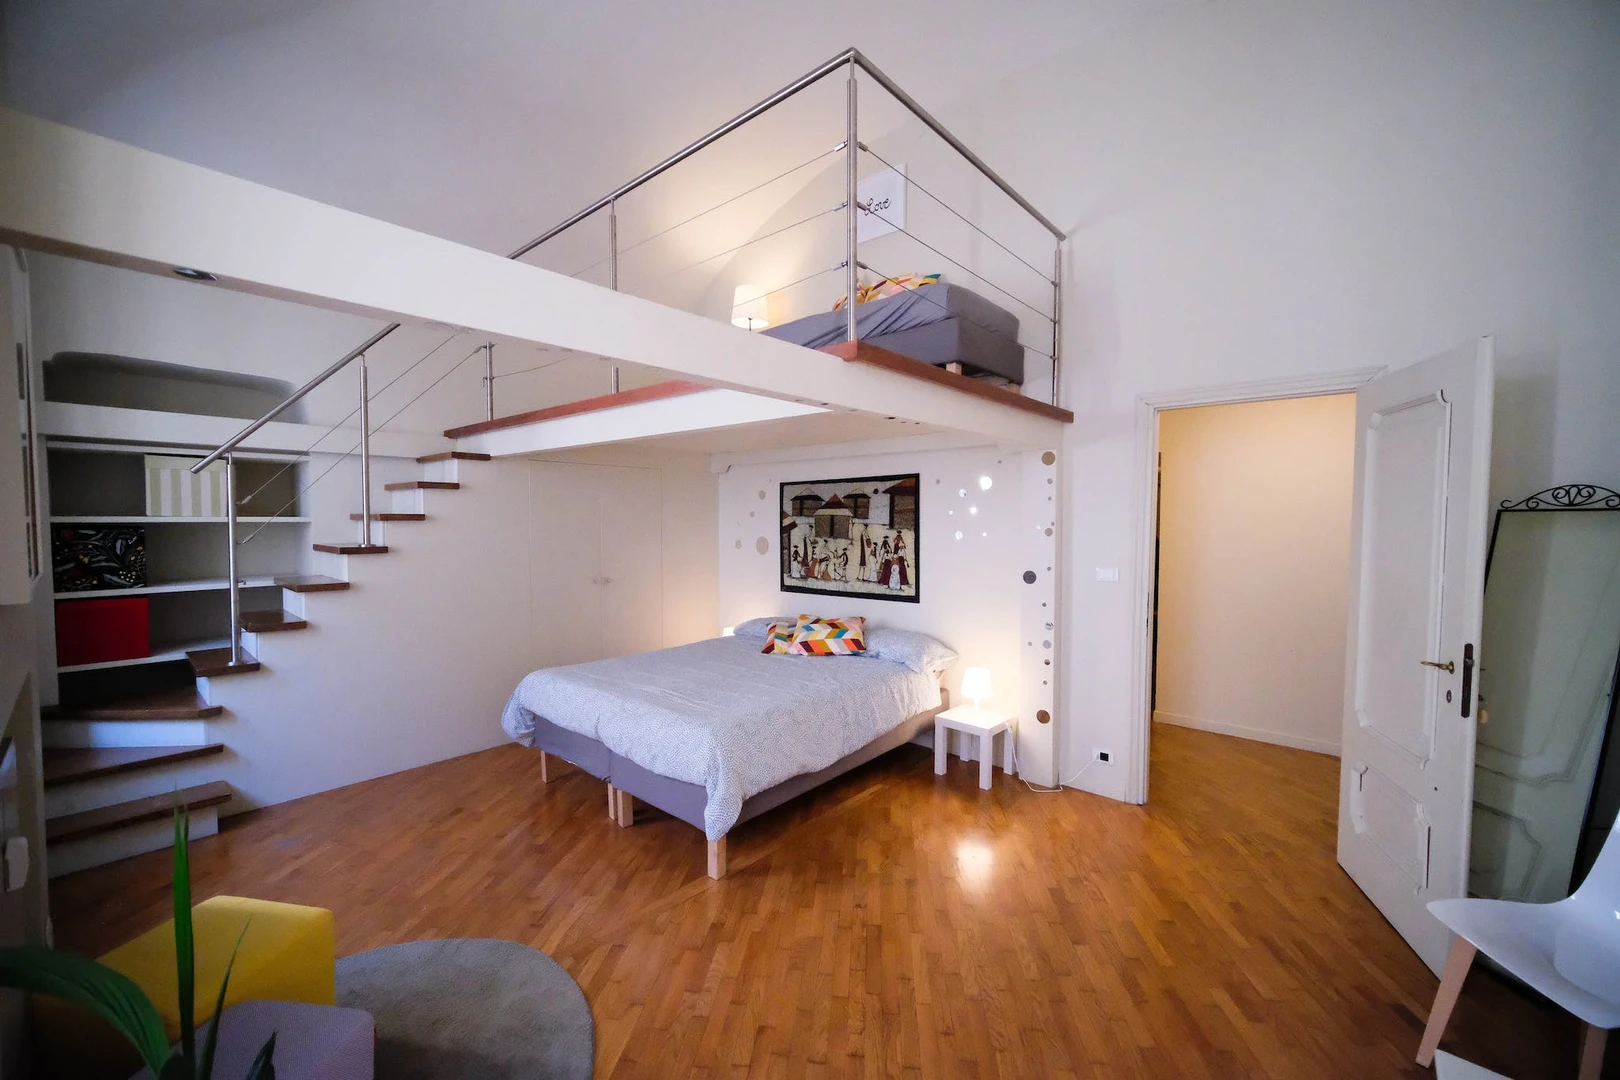 Shared room in 3-bedroom flat torino